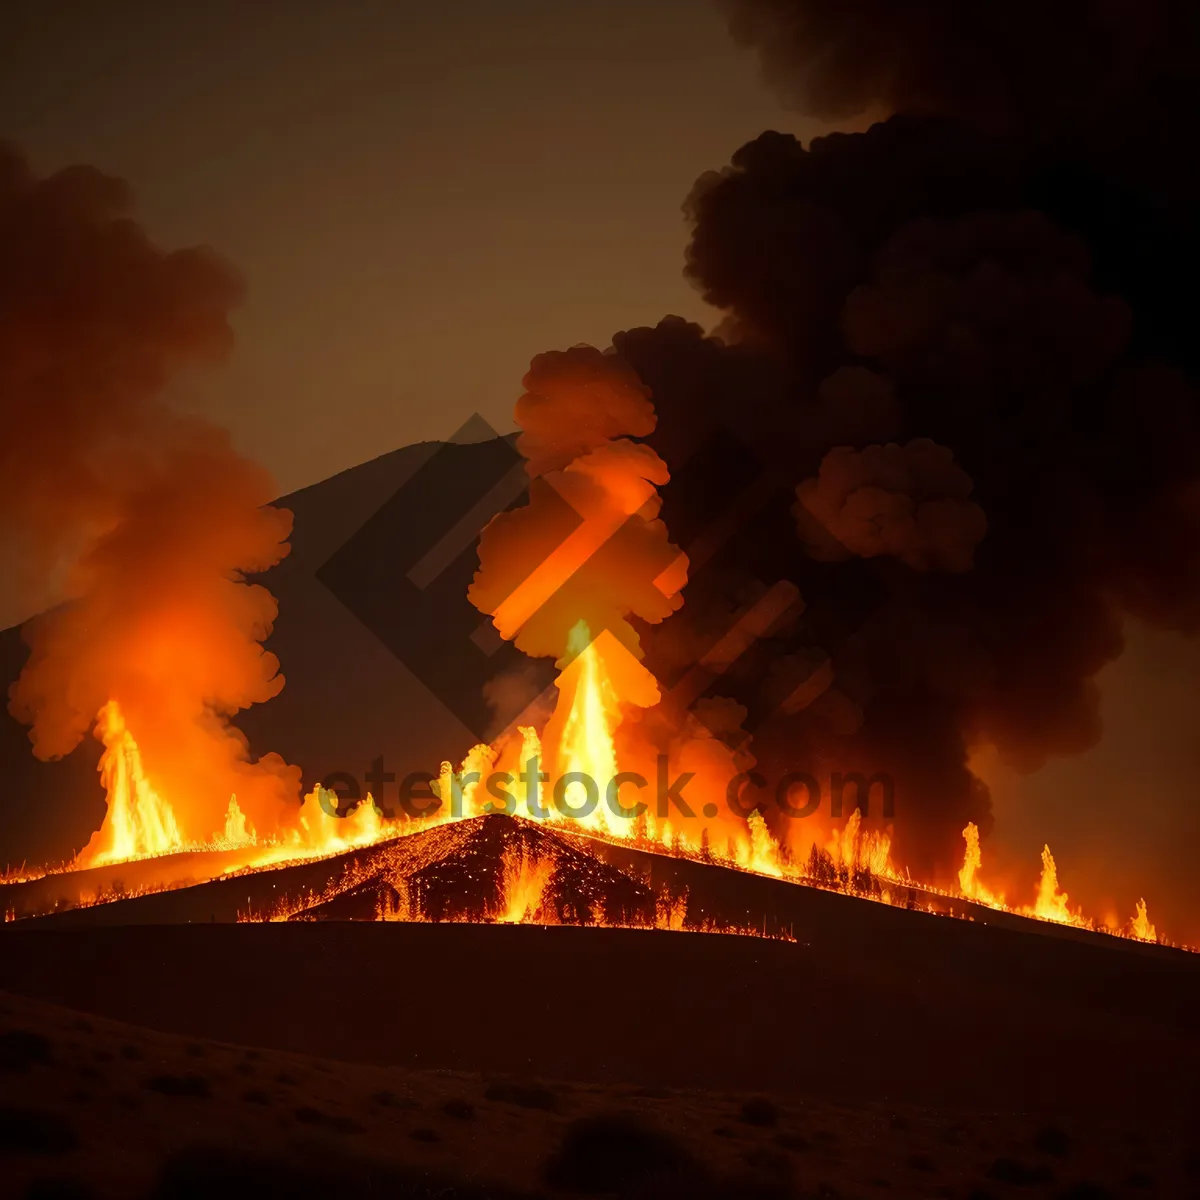 Picture of Fiery Sky: Sunset Flamethrower Illuminates Volcanic Landscape